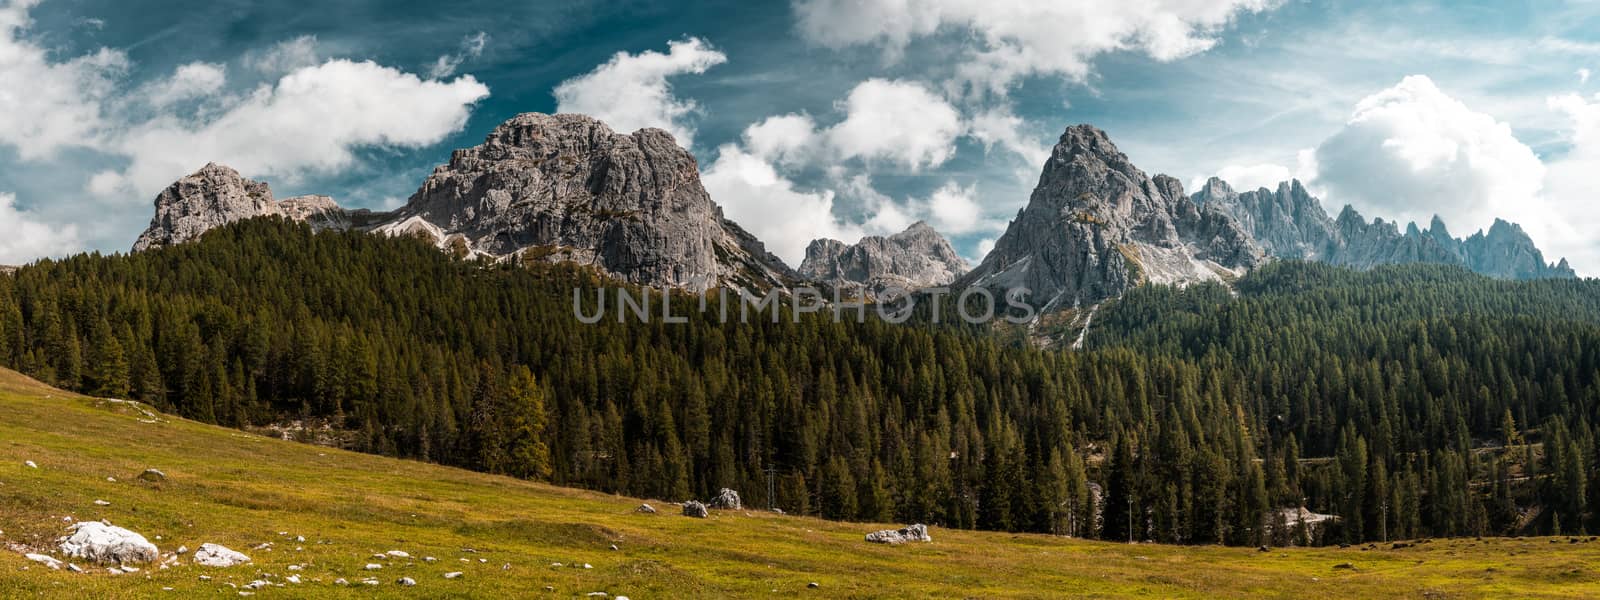 Tre Cimes di Lavaredo. Outdoor Adventure Wide Stitched Panorama. Panoramic Image of Italian Alps.